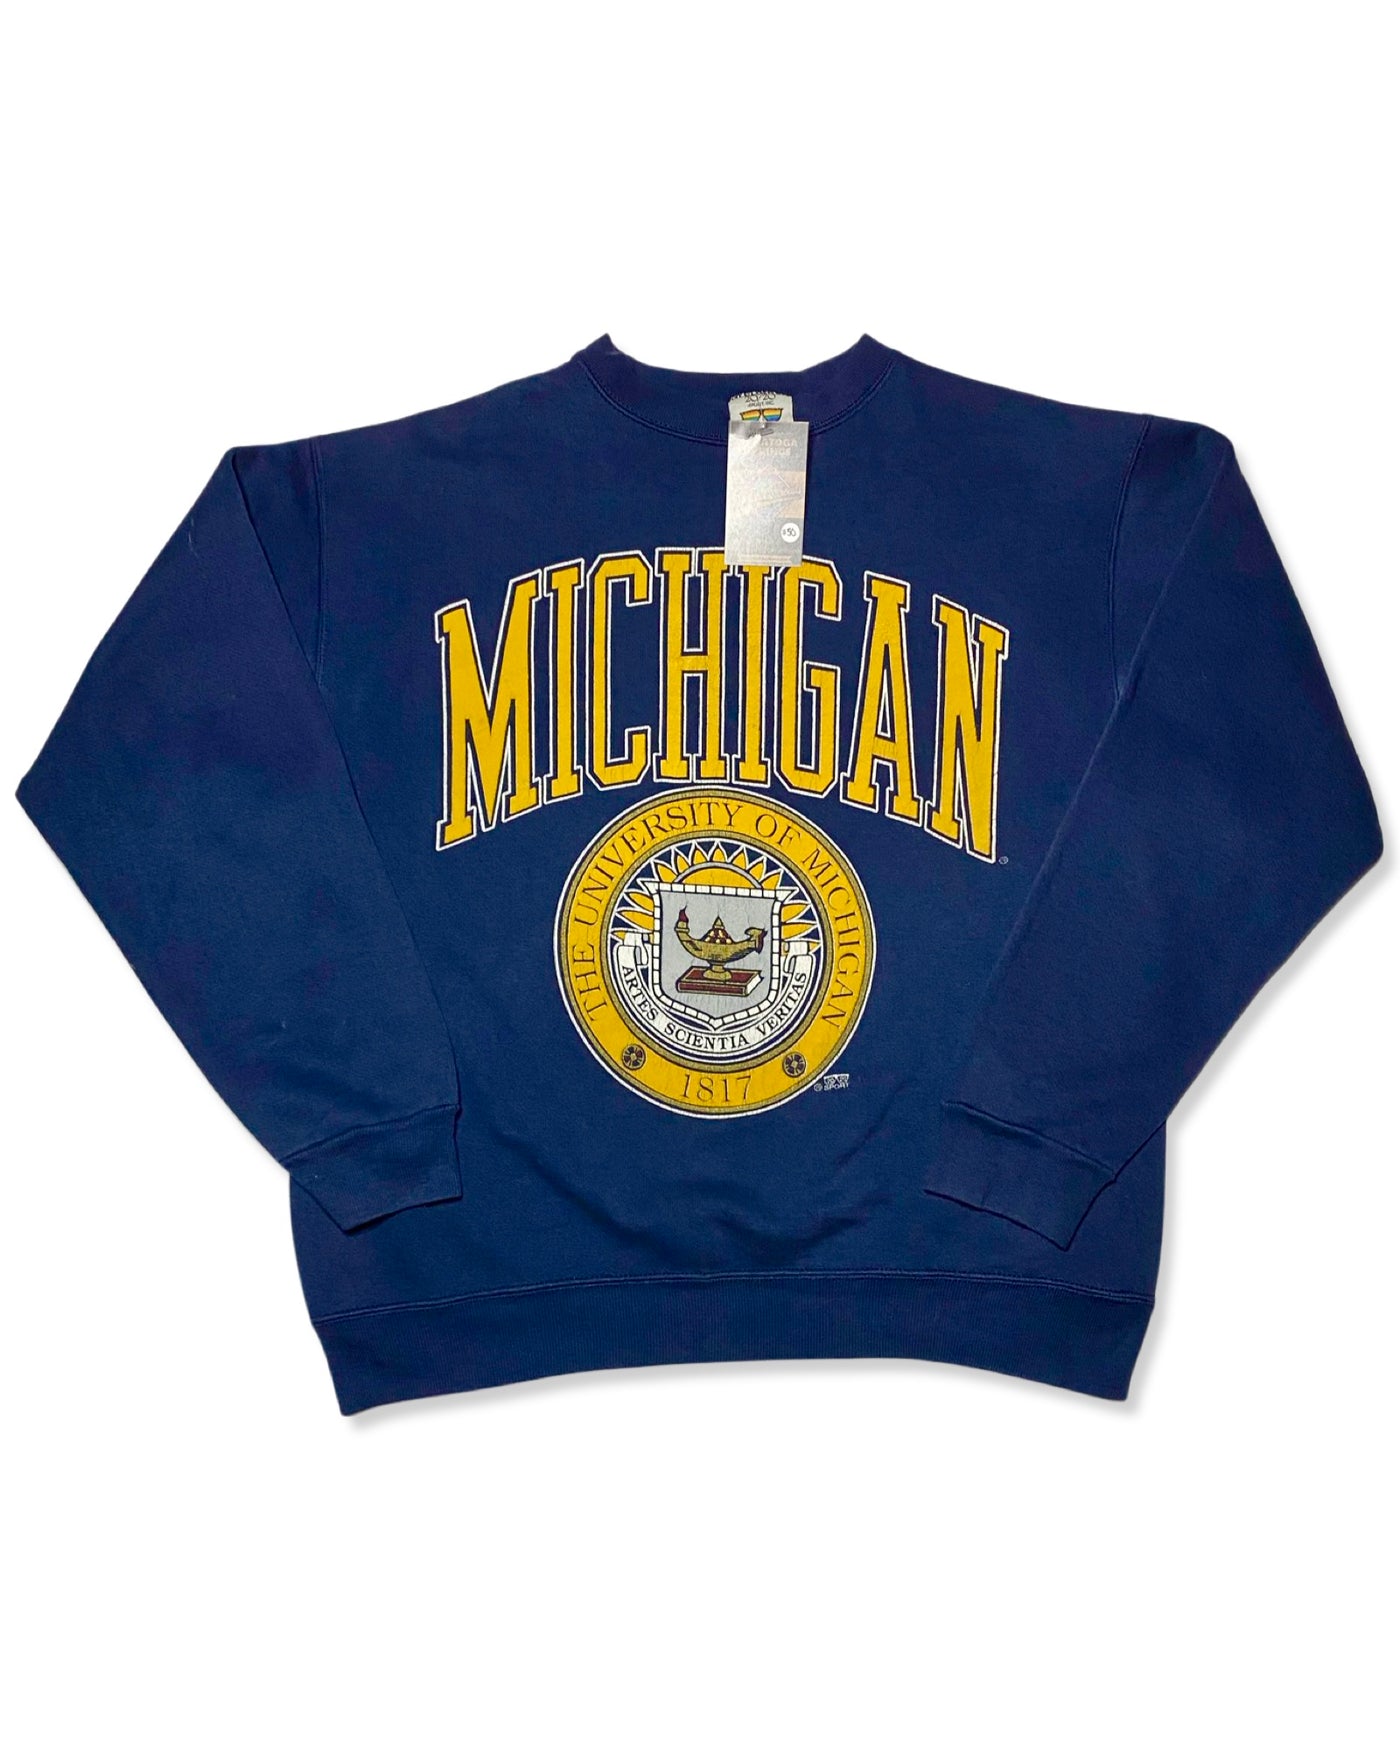 Vintage Michigan University Crewneck